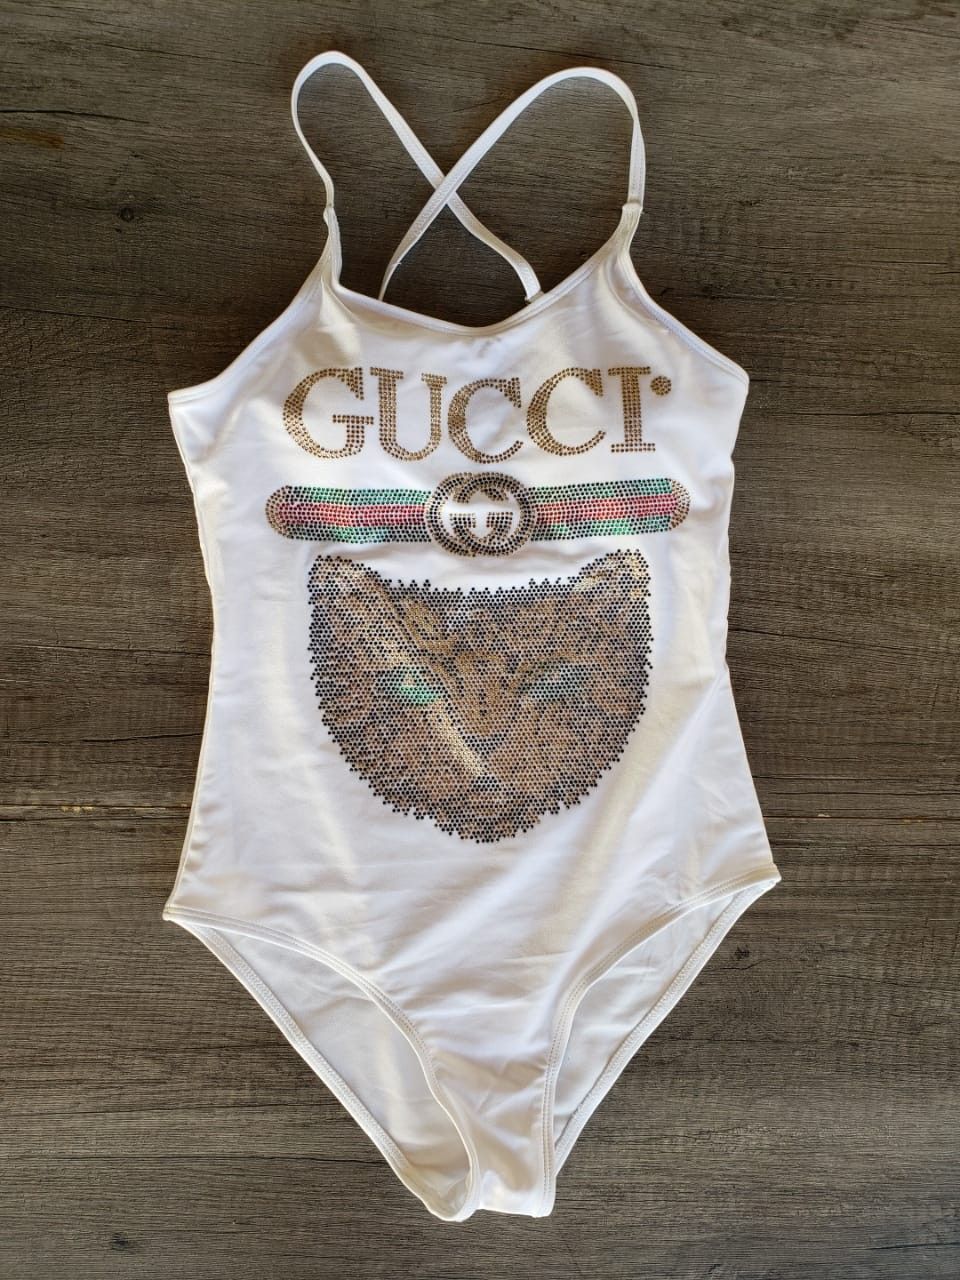 New Gucci women's swimsuit bodysuit